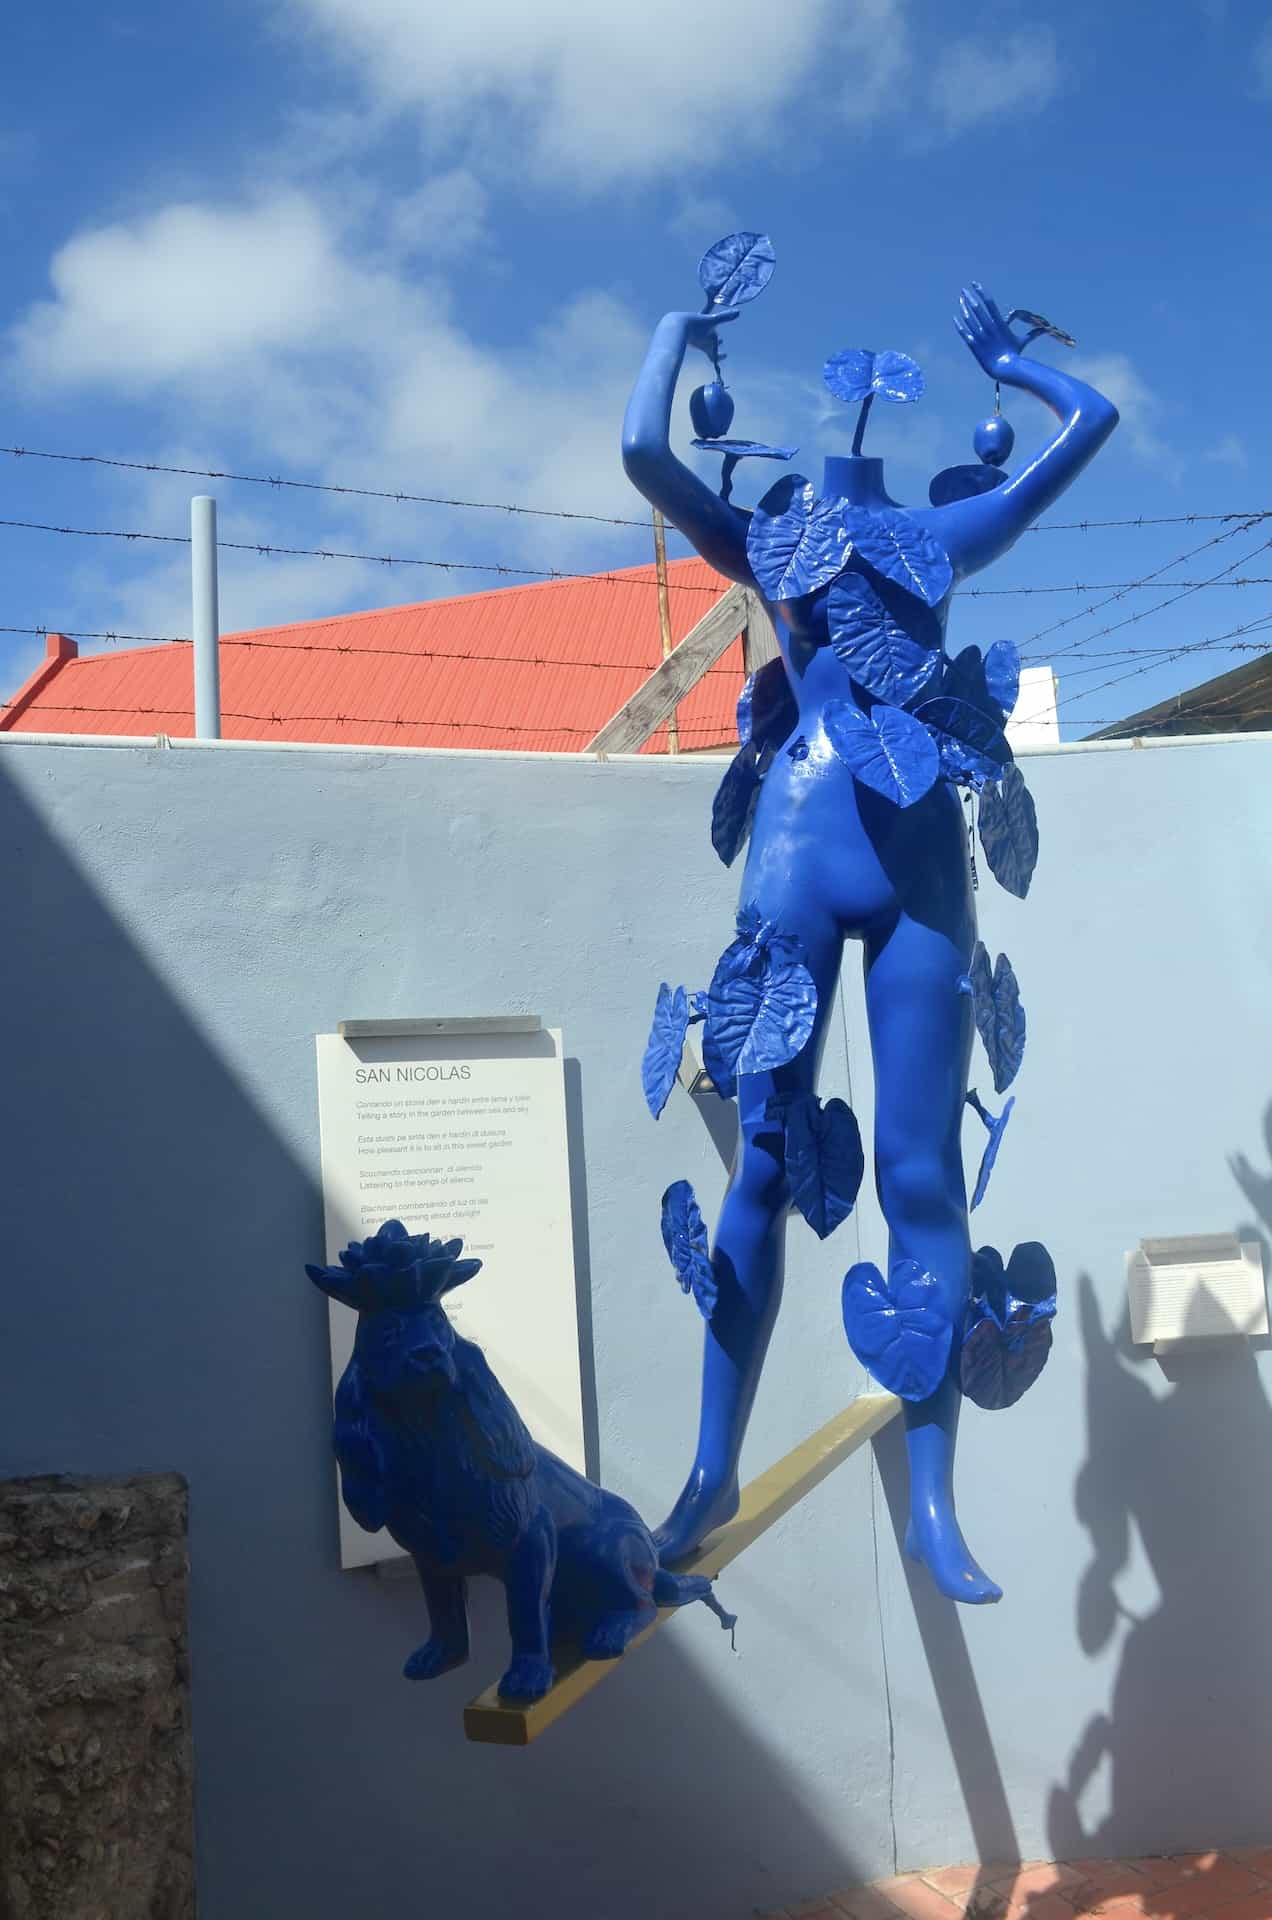 San Nicolas: A Leap of Faith by Osaira Muyale at the Community Museum in San Nicolas, Aruba